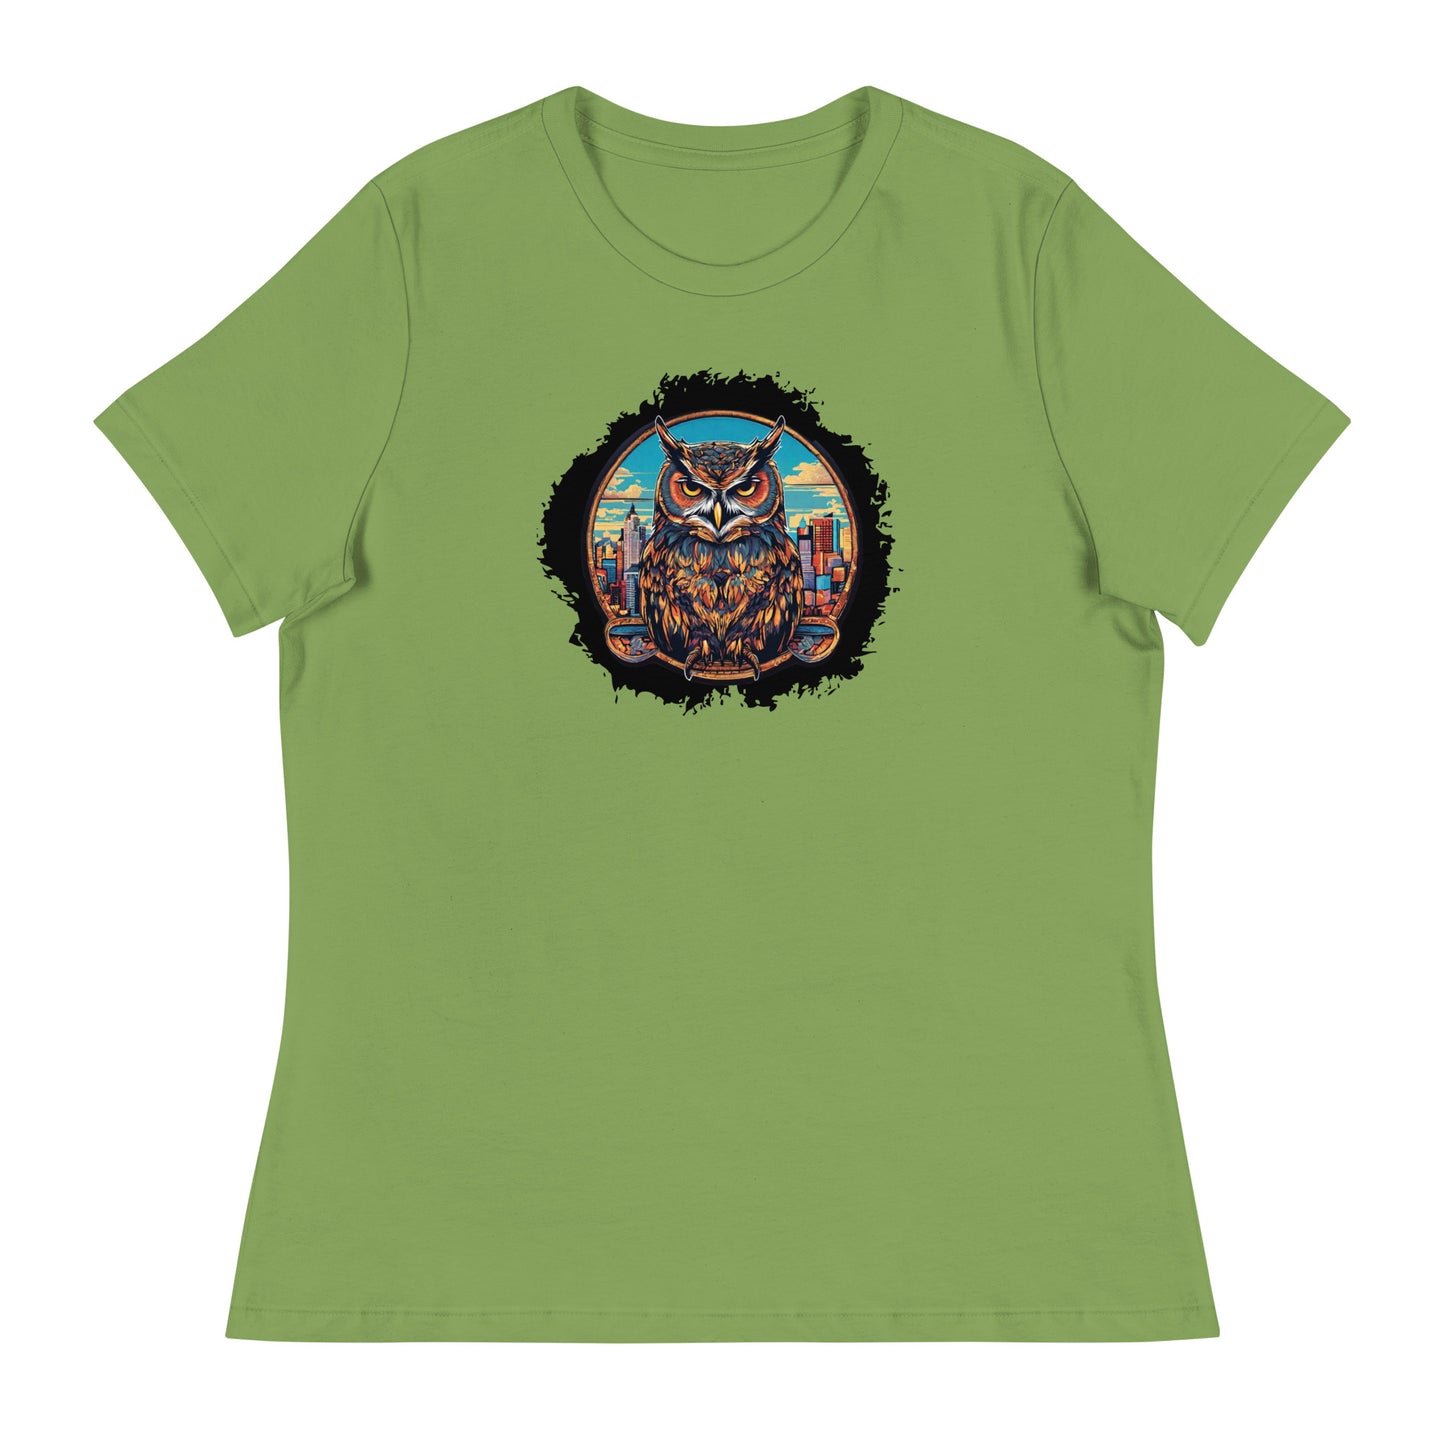 Owl in the City Emblem Women's T-Shirt Leaf